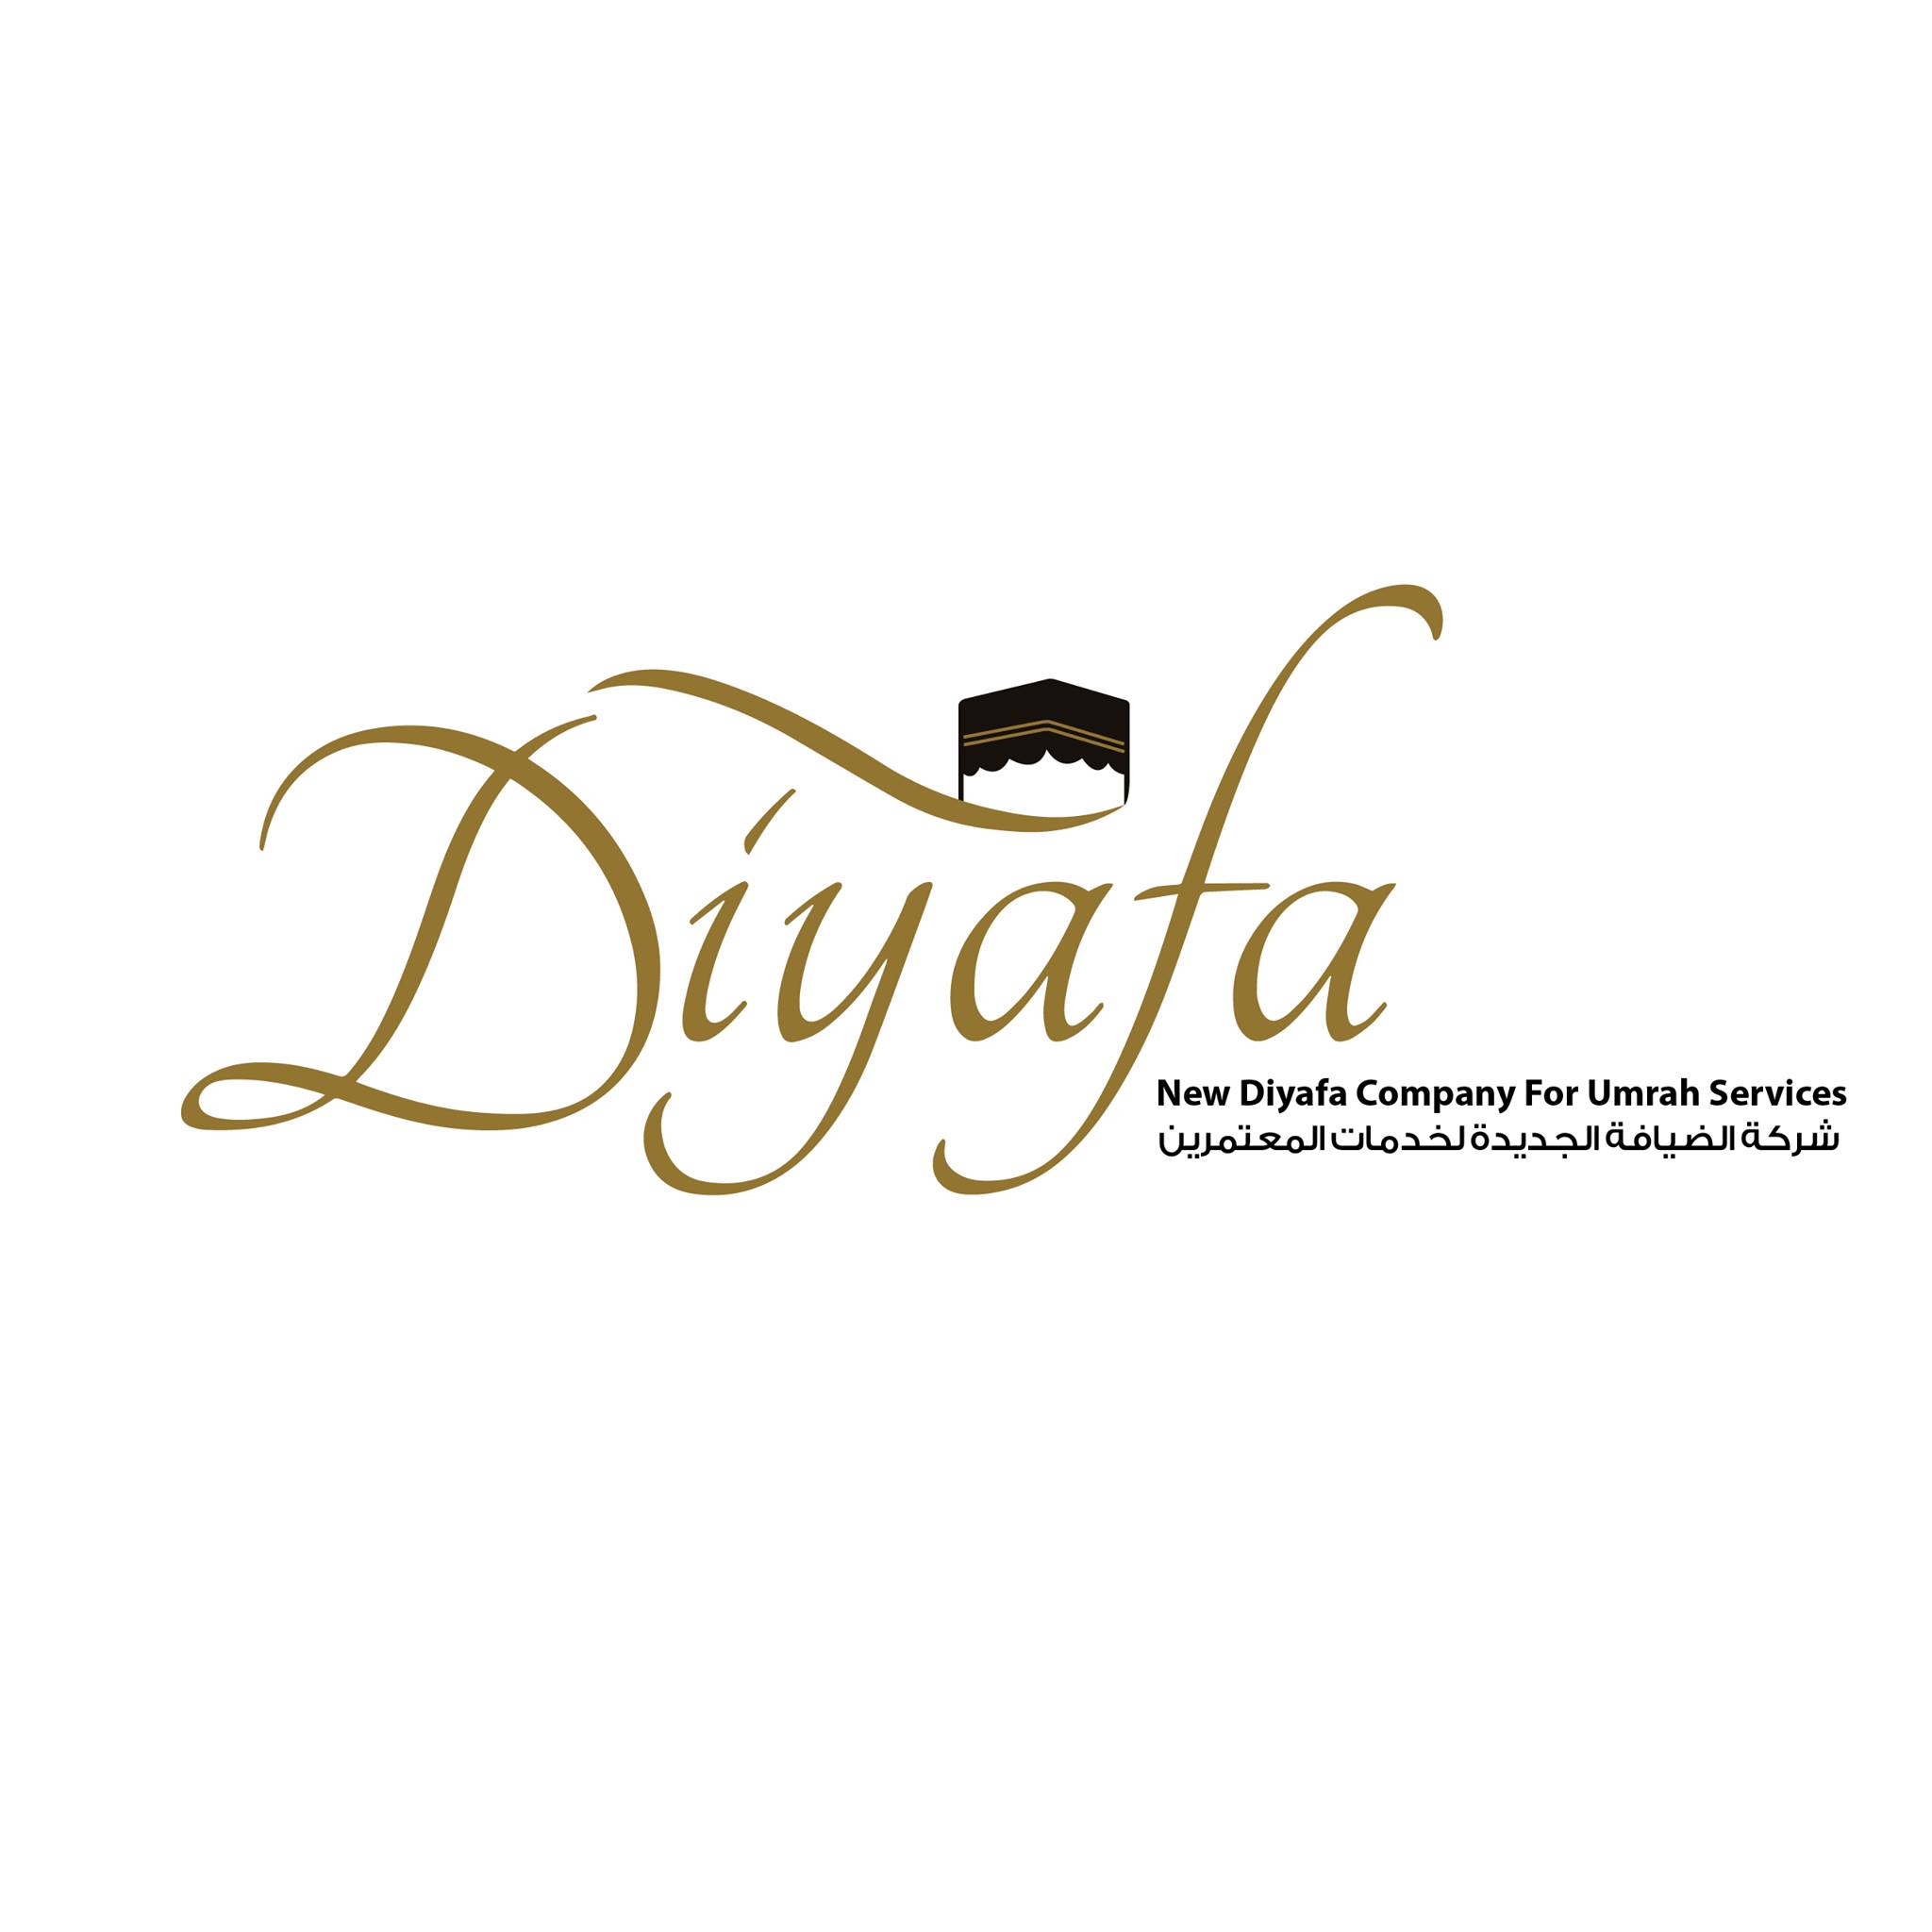 New Diyafa Company for Umrah Services